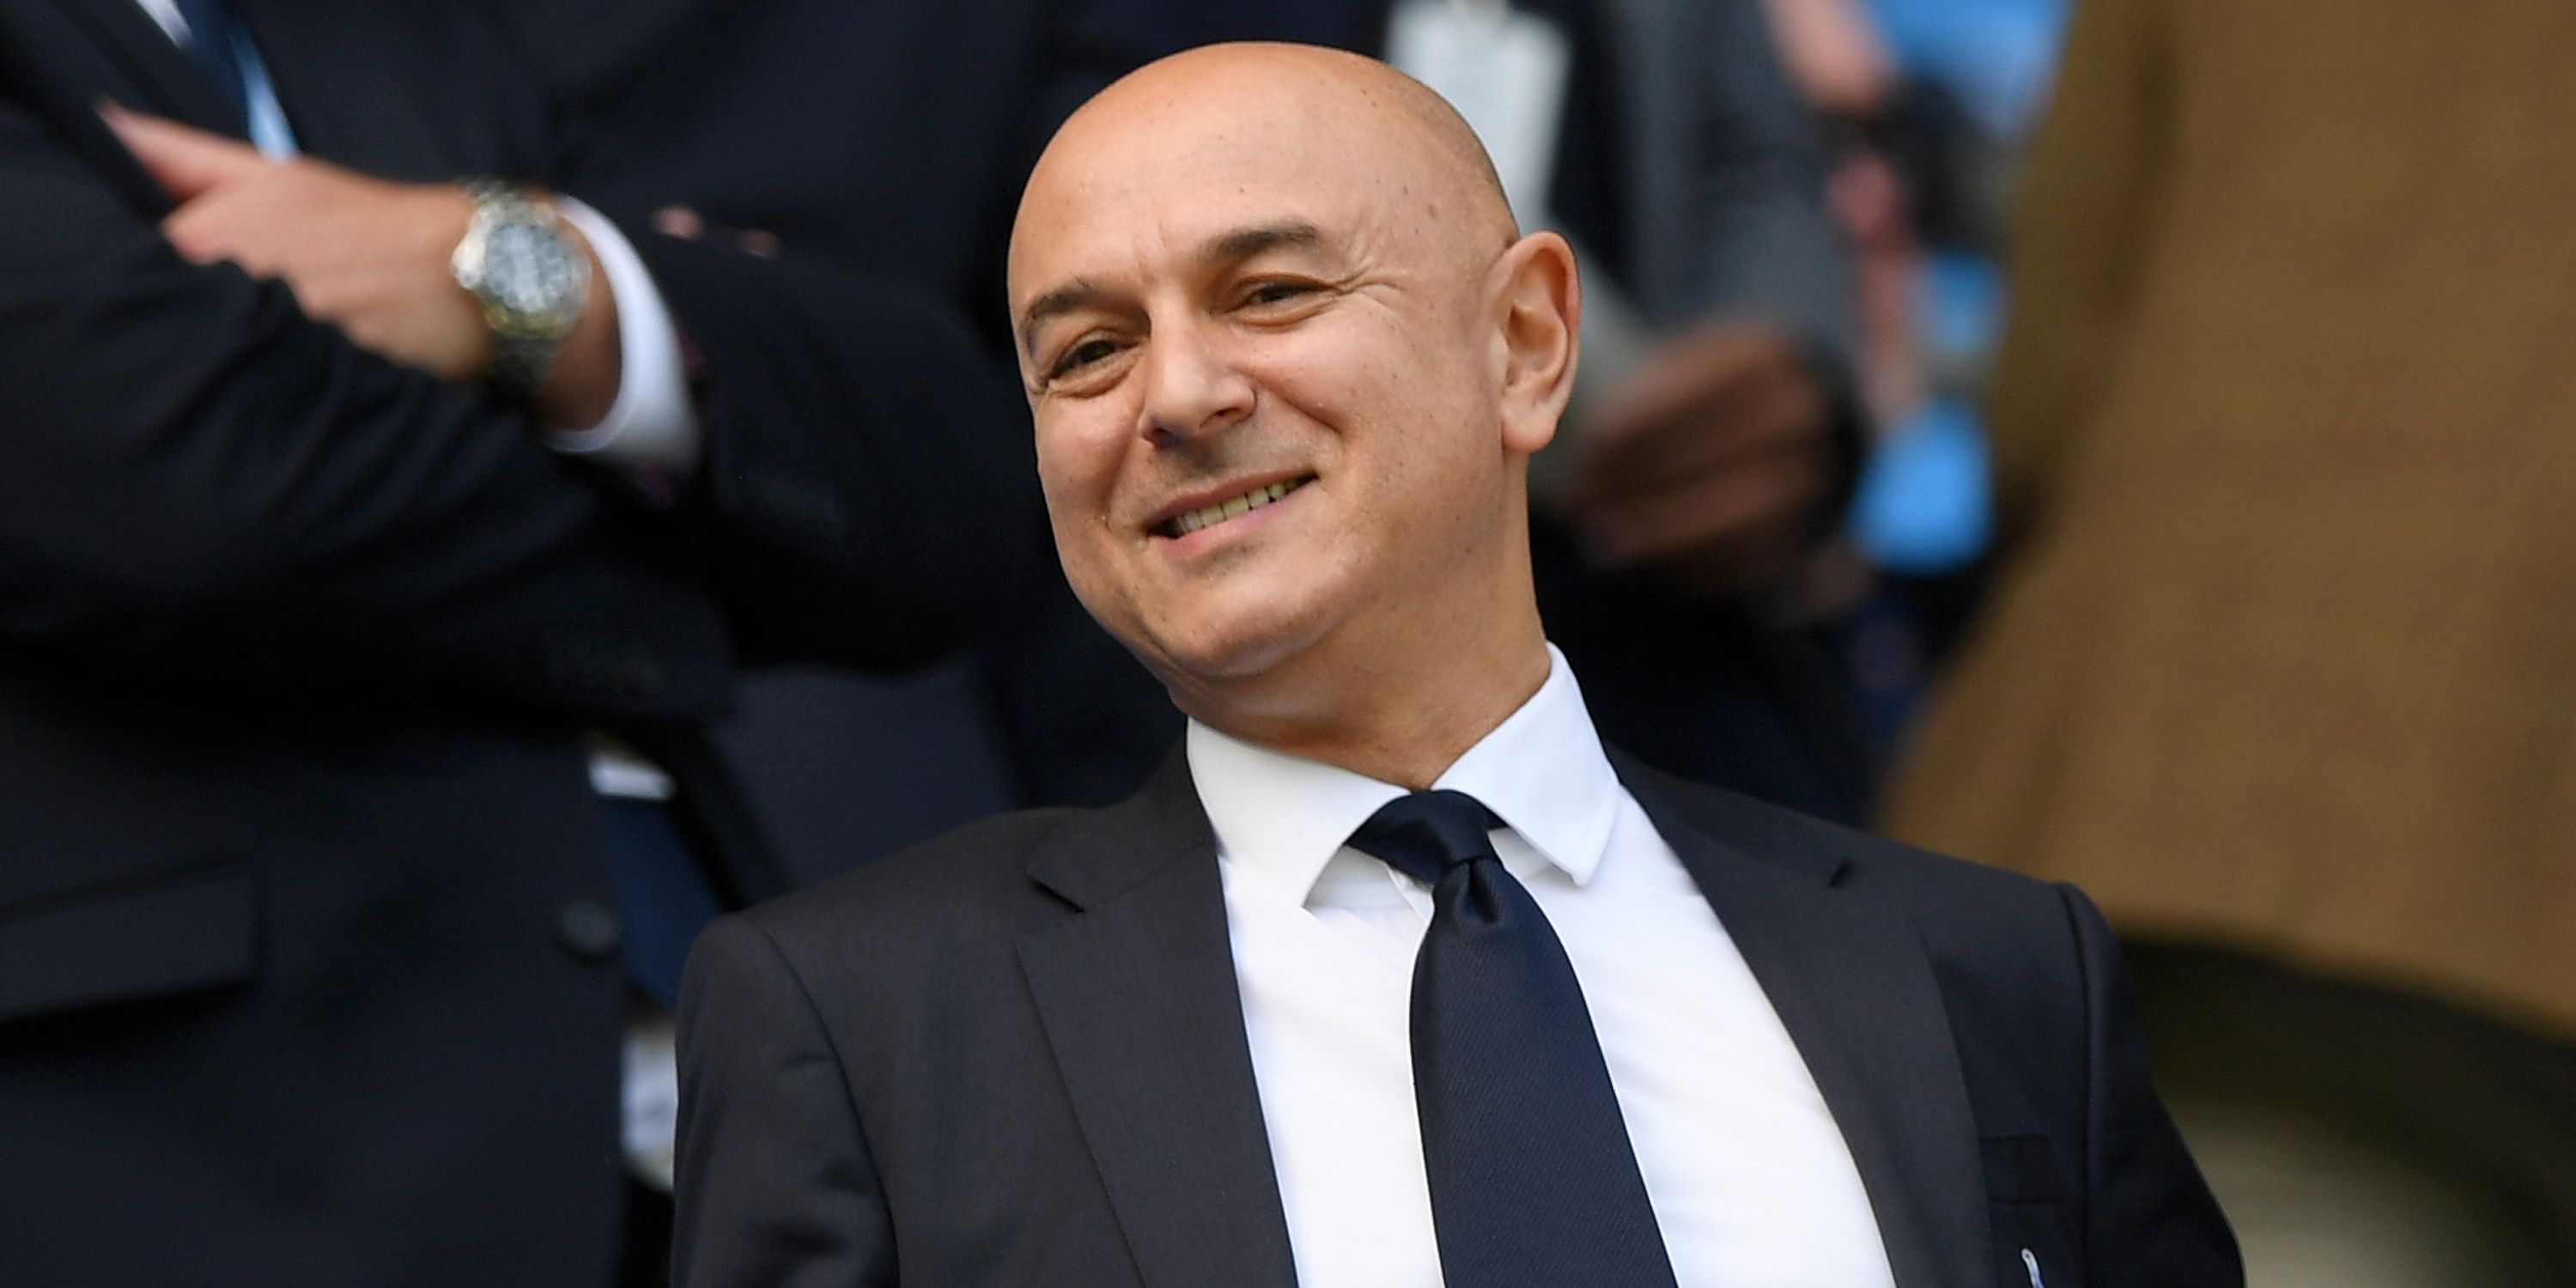 Tottenham chairman Daniel Levy smiling